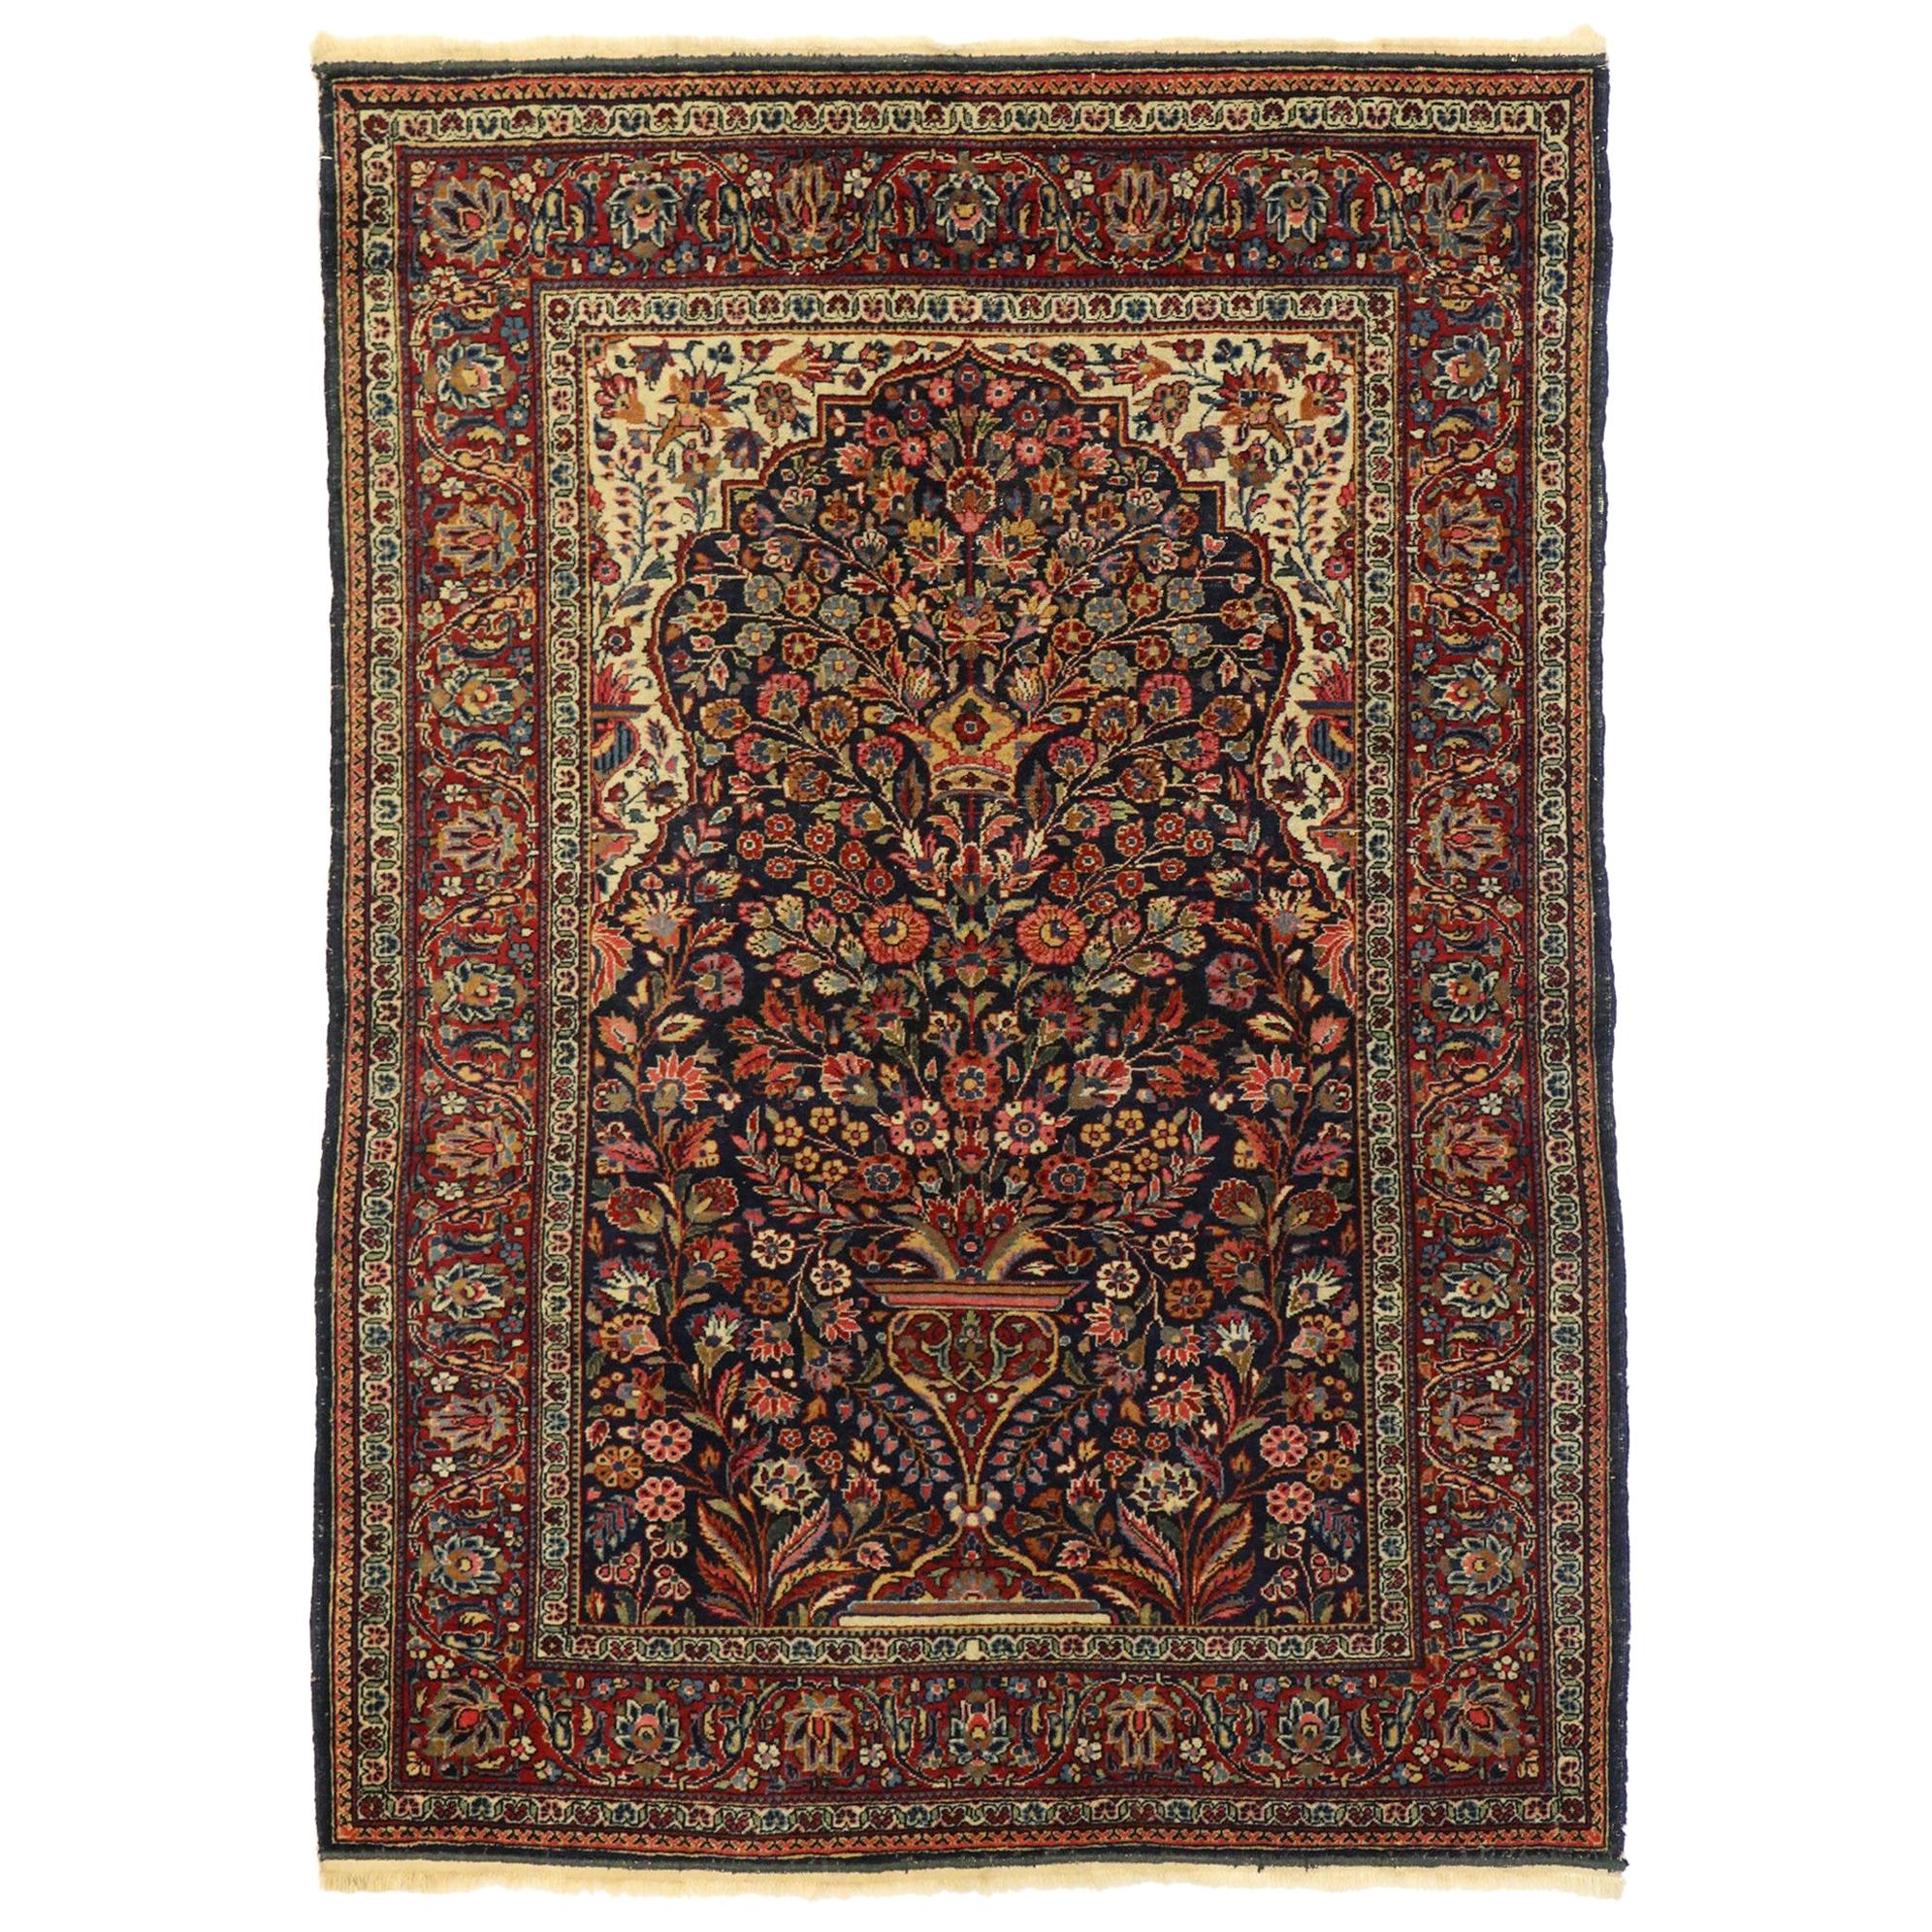 Antique Persian Kashan Vase Prayer Rug with Art Nouveau Style For Sale